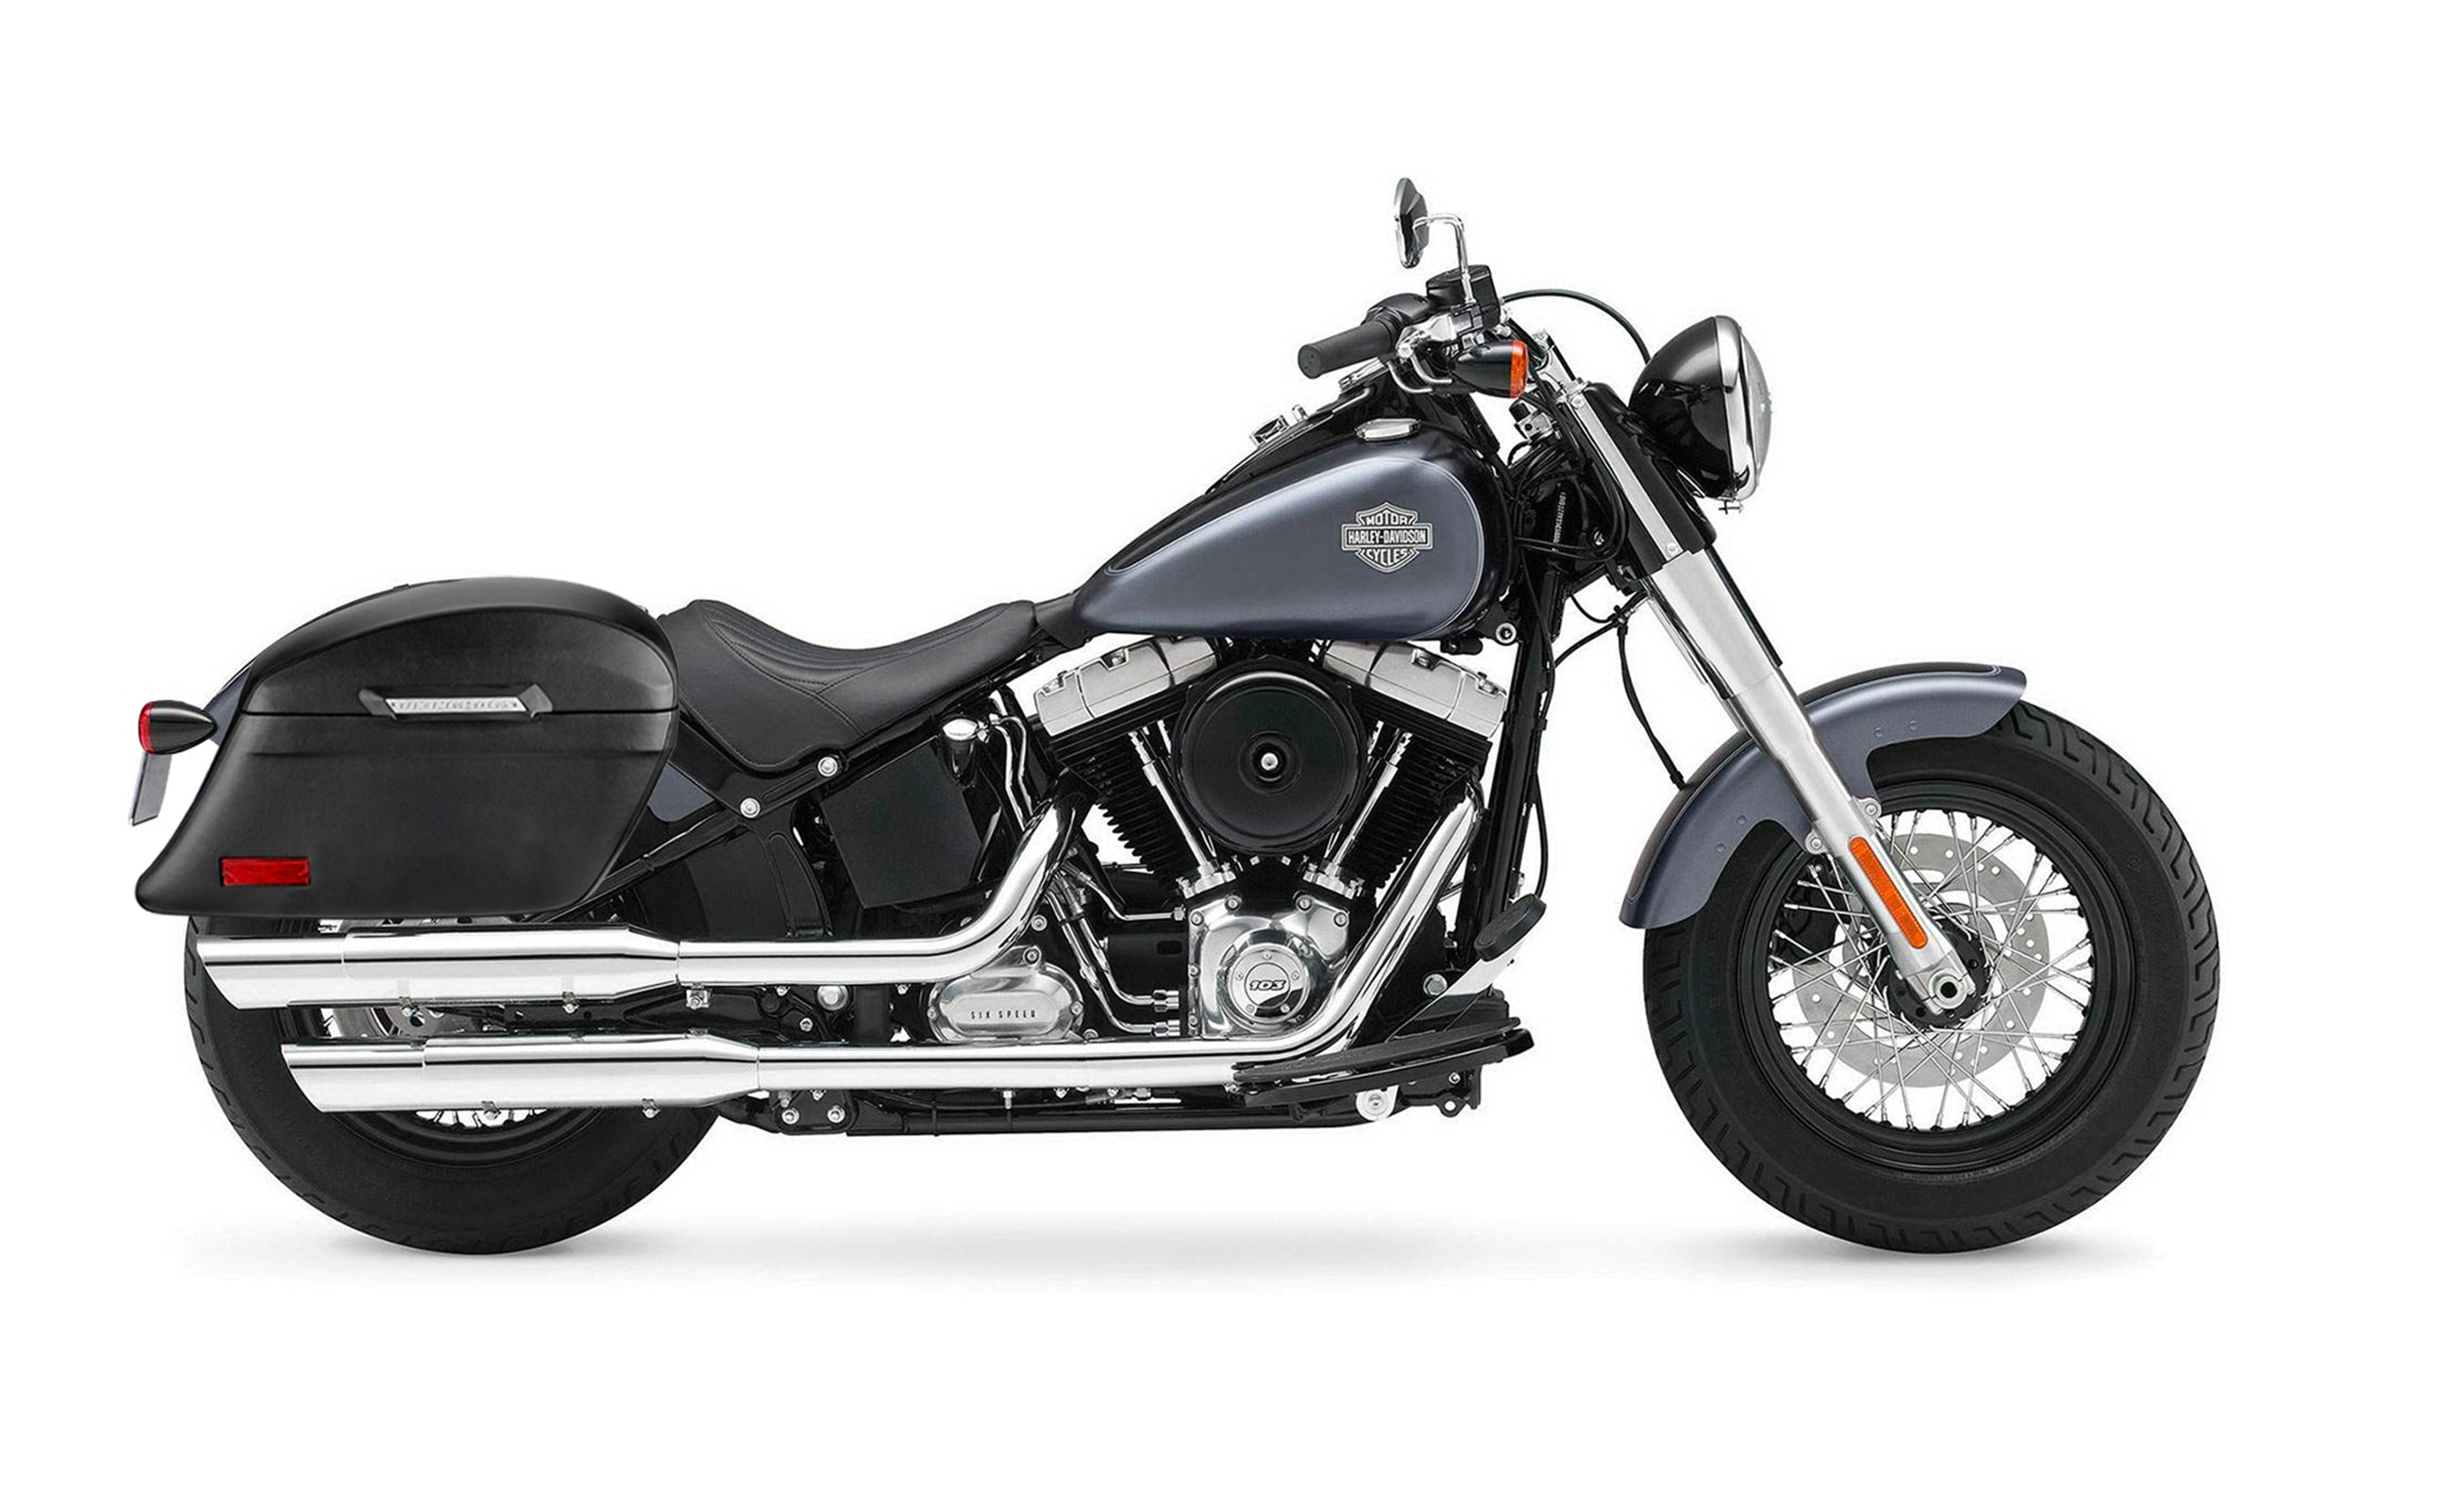 44L - Lamellar Stallion XL Leather Covered Motorcycle Hard Saddlebags for Harley Softail Slim FLS on Bike Photo @expand